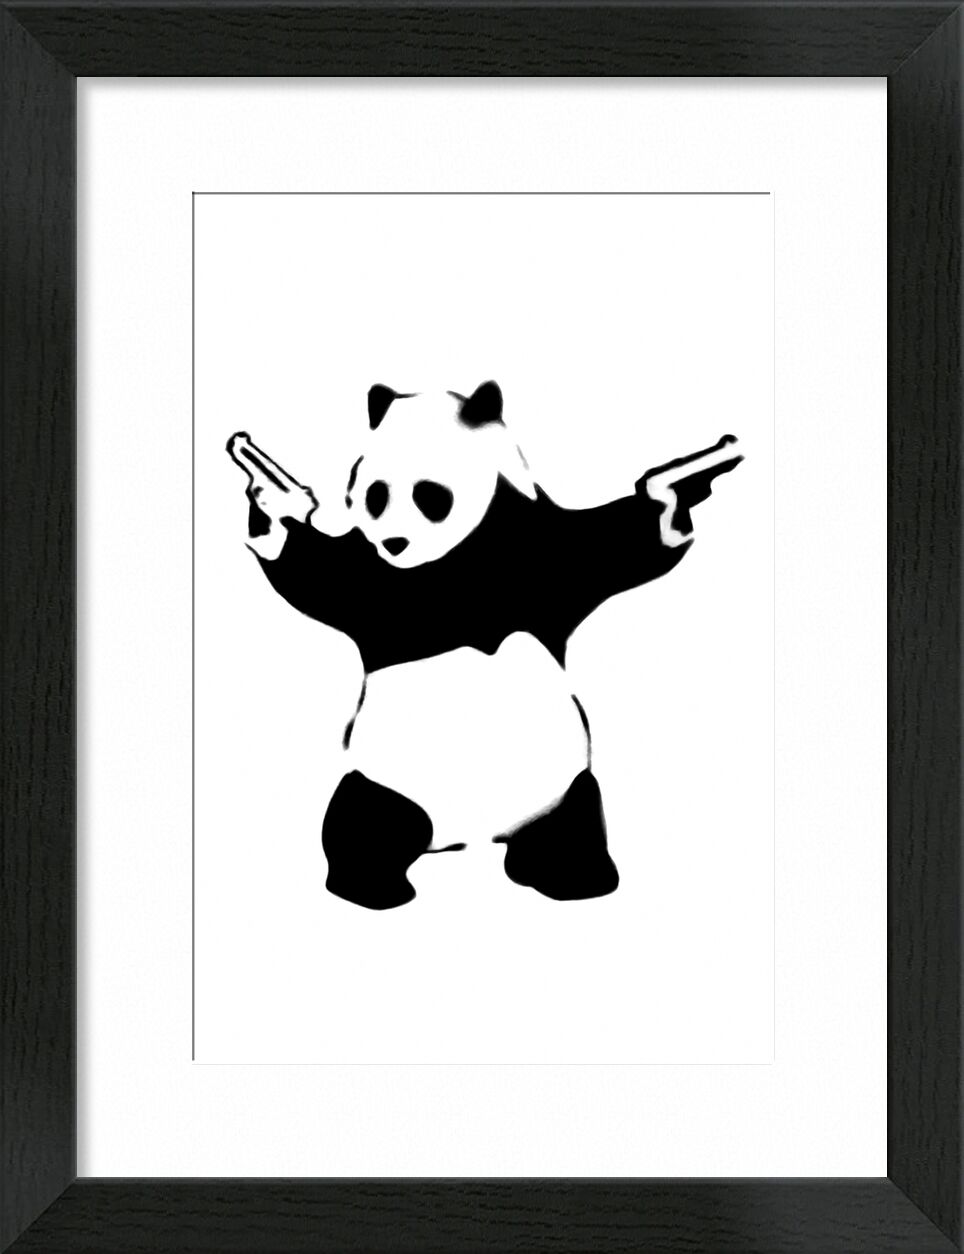 Pandamonium - BANKSY von Bildende Kunst, Prodi Art, Rebellion, bewaffnet, Panda, Straßenkunst, banksy